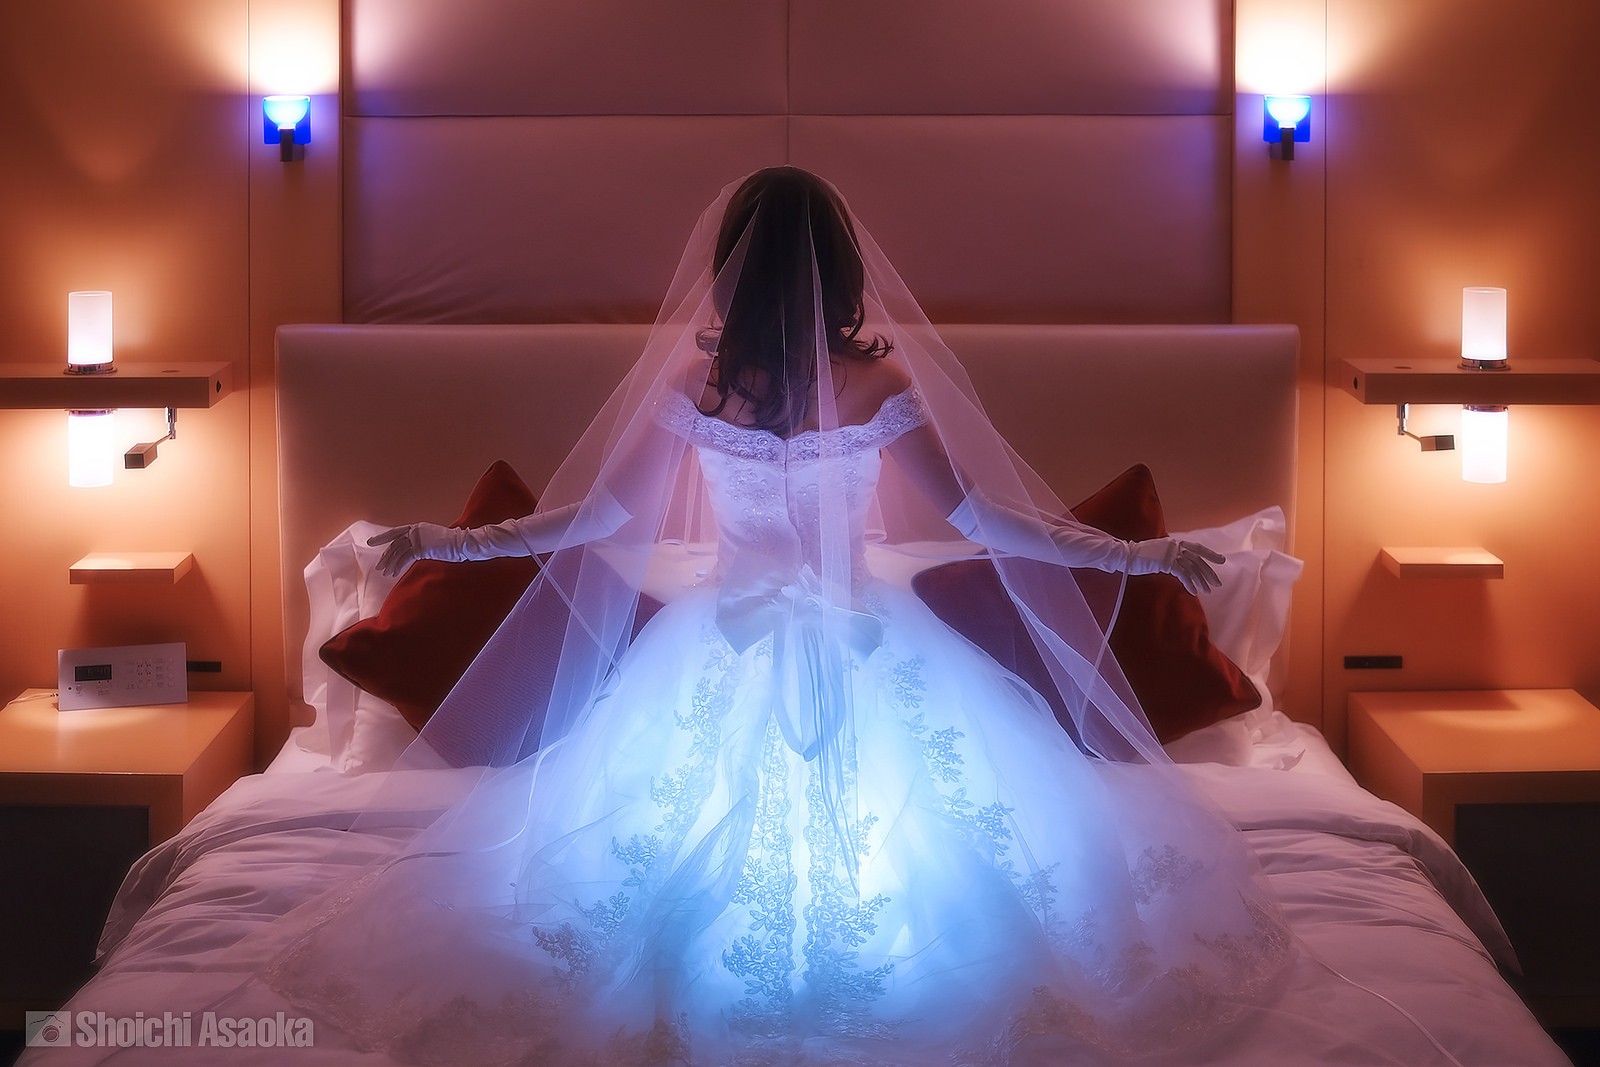 People 1600x1067 brides wedding dress room interior glowing Shoichi Asaoka women